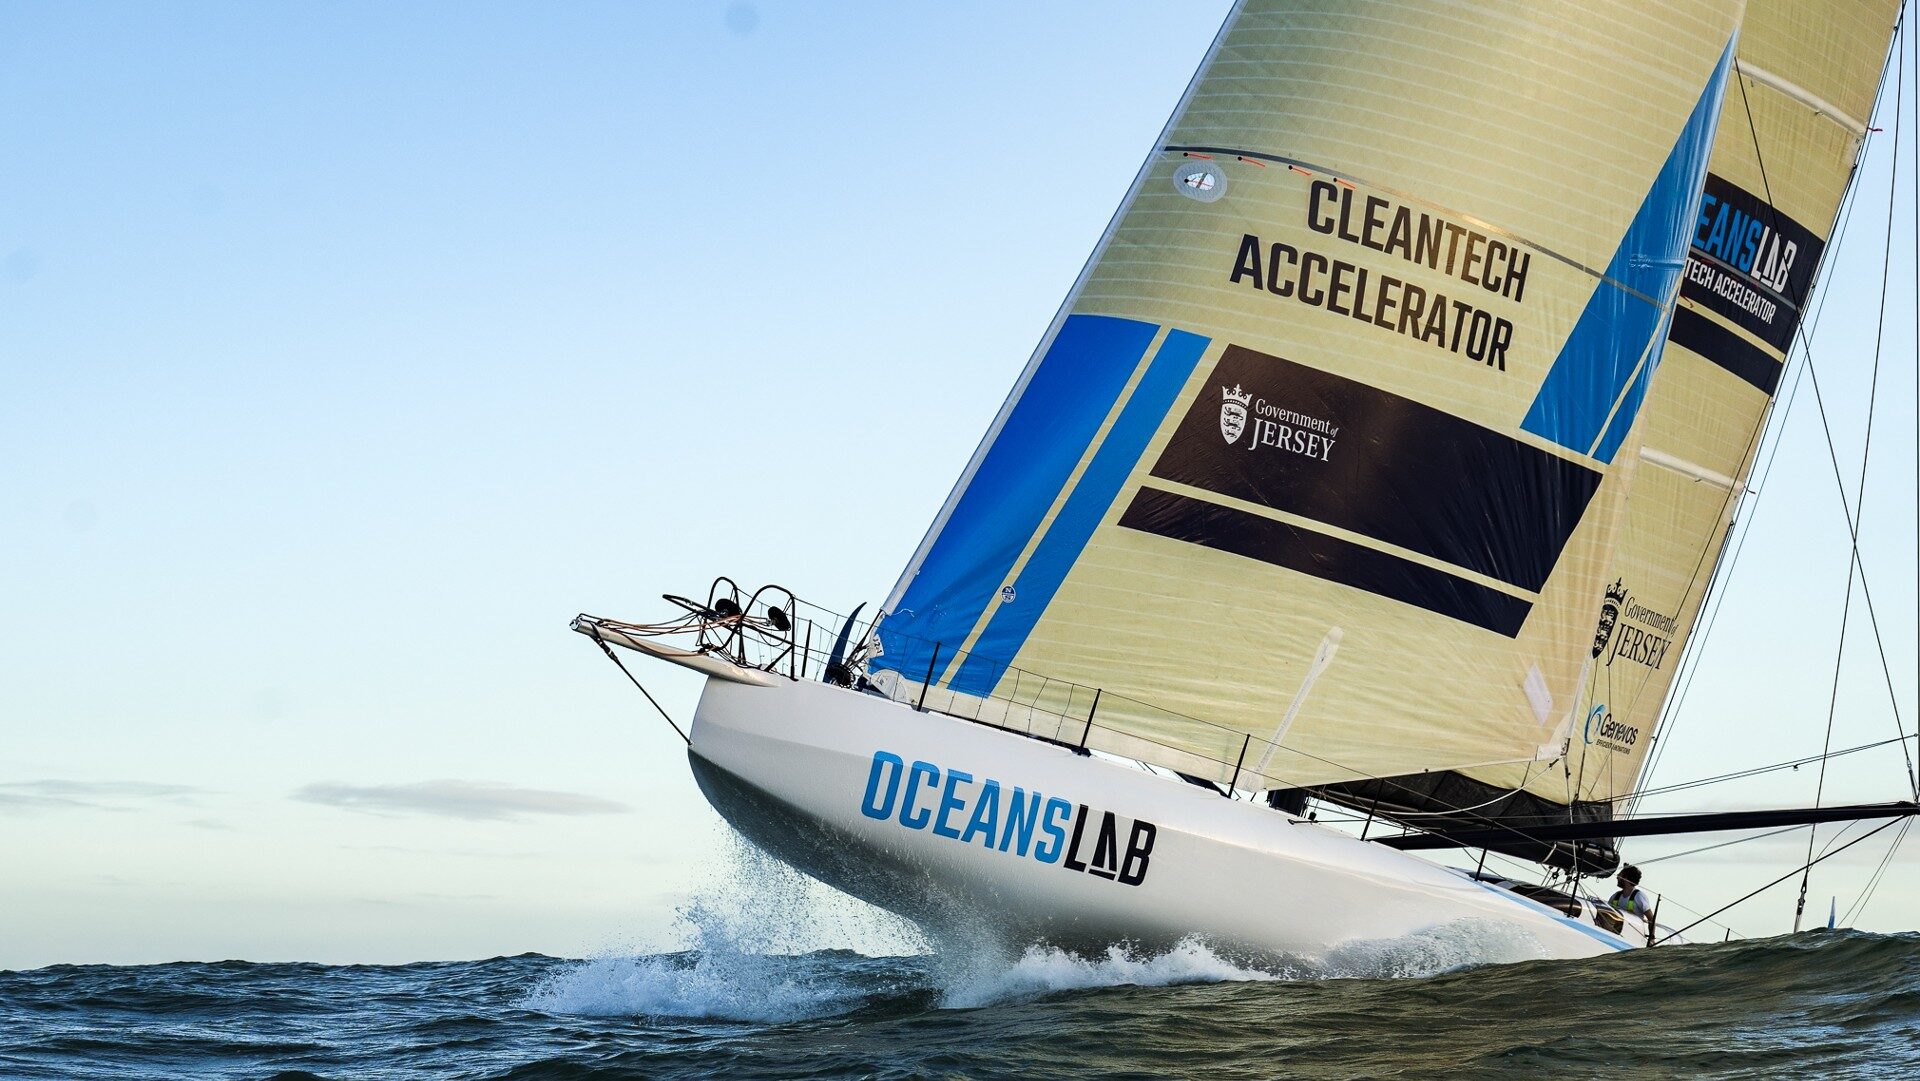 OceansLab - Cleantech Accelerator Credit PuraVida Images